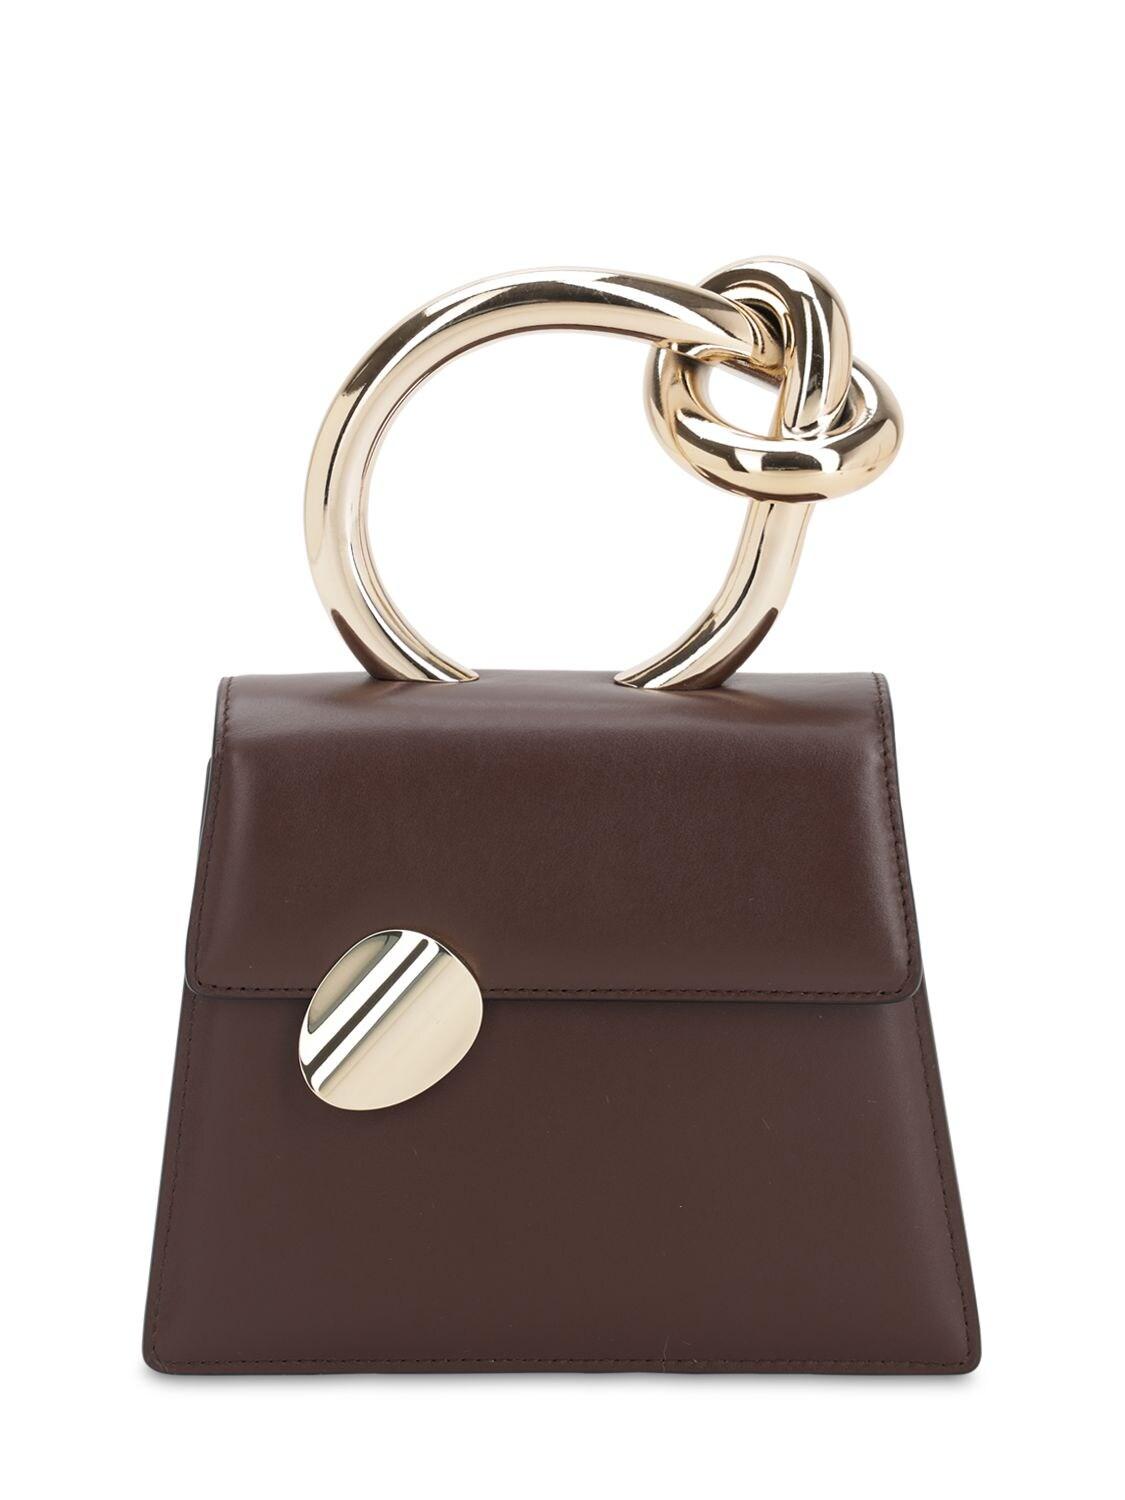 Benedetta Bruzziches Brigitta Small Leather Top Handle Bag in Brown - Lyst